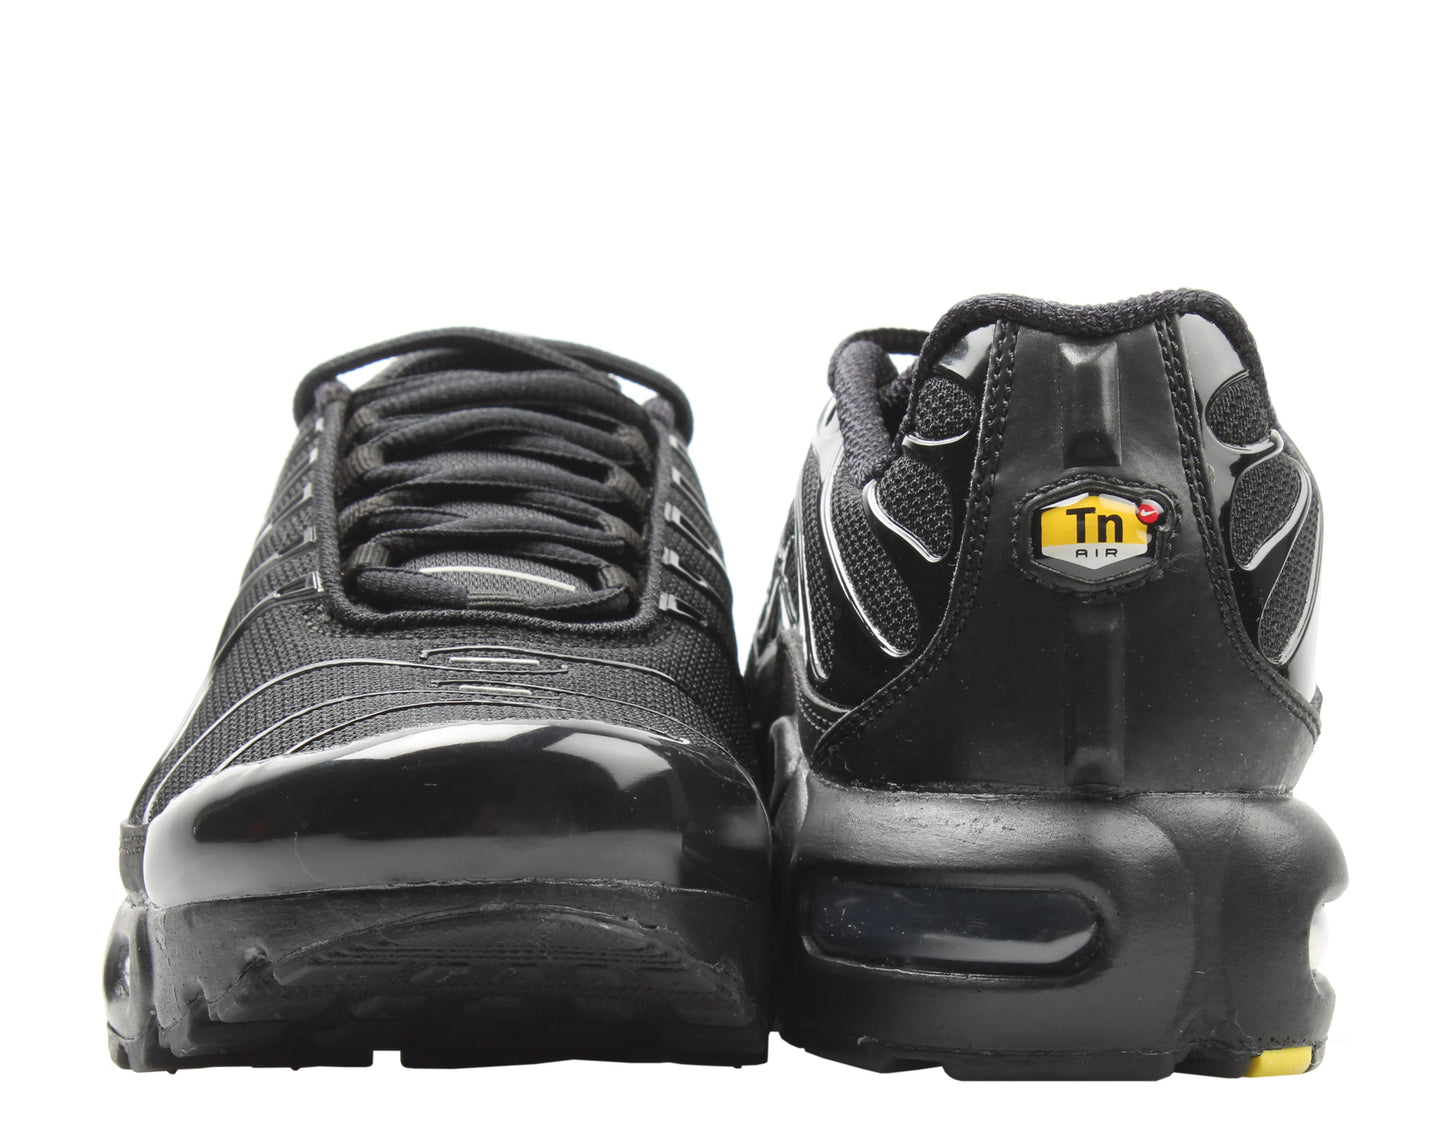 Nike Air Max Plus (GS) Triple Black Big Kids Running Shoes CD0609-001